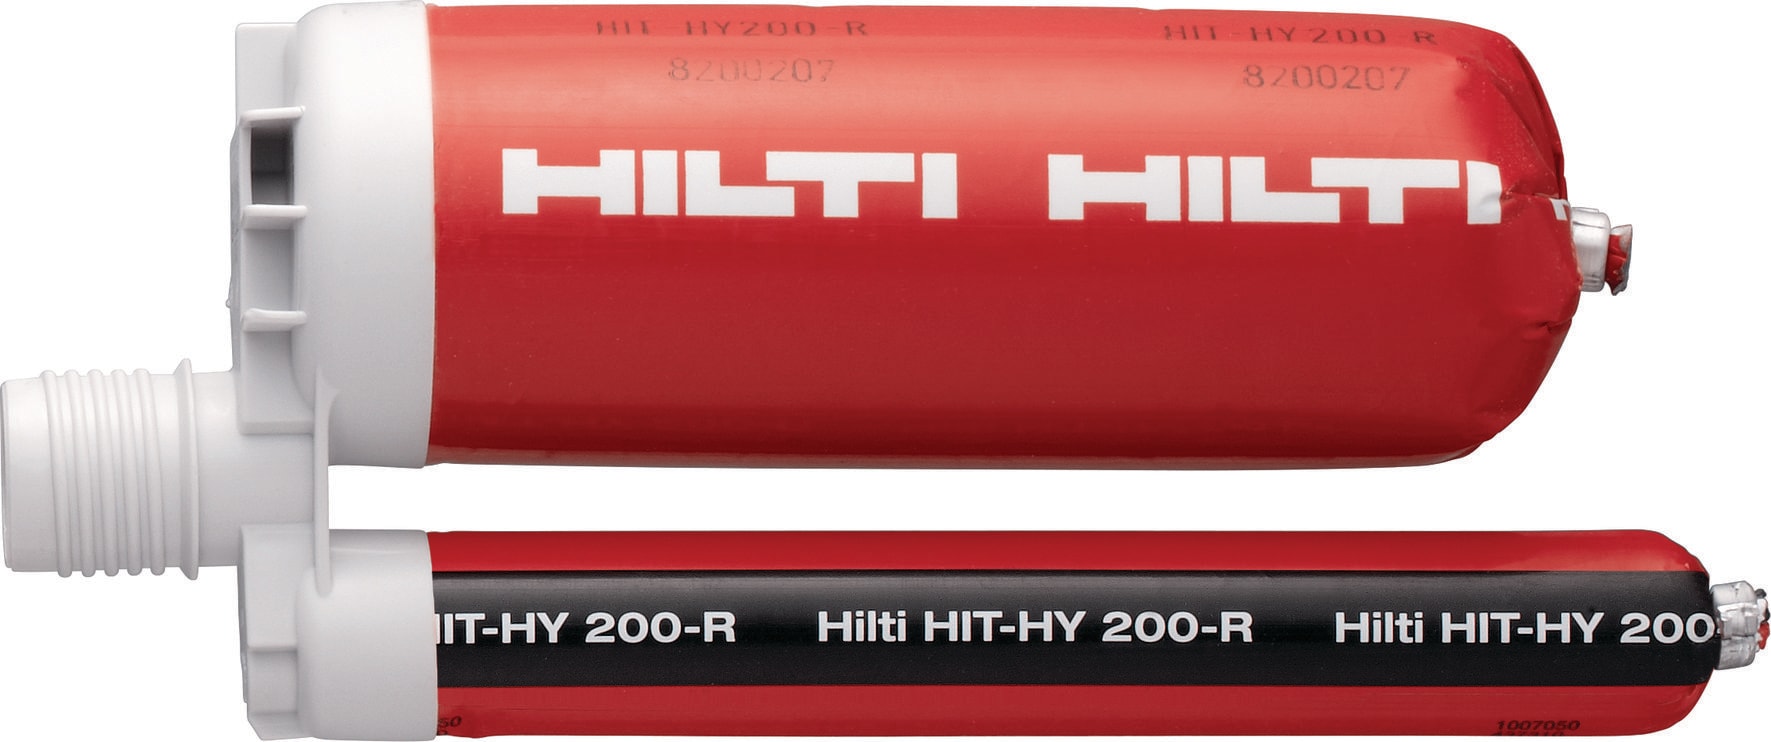 HIT-HY 200-R 接着系アンカー - 接着系注入方式アンカー - Hilti Japan